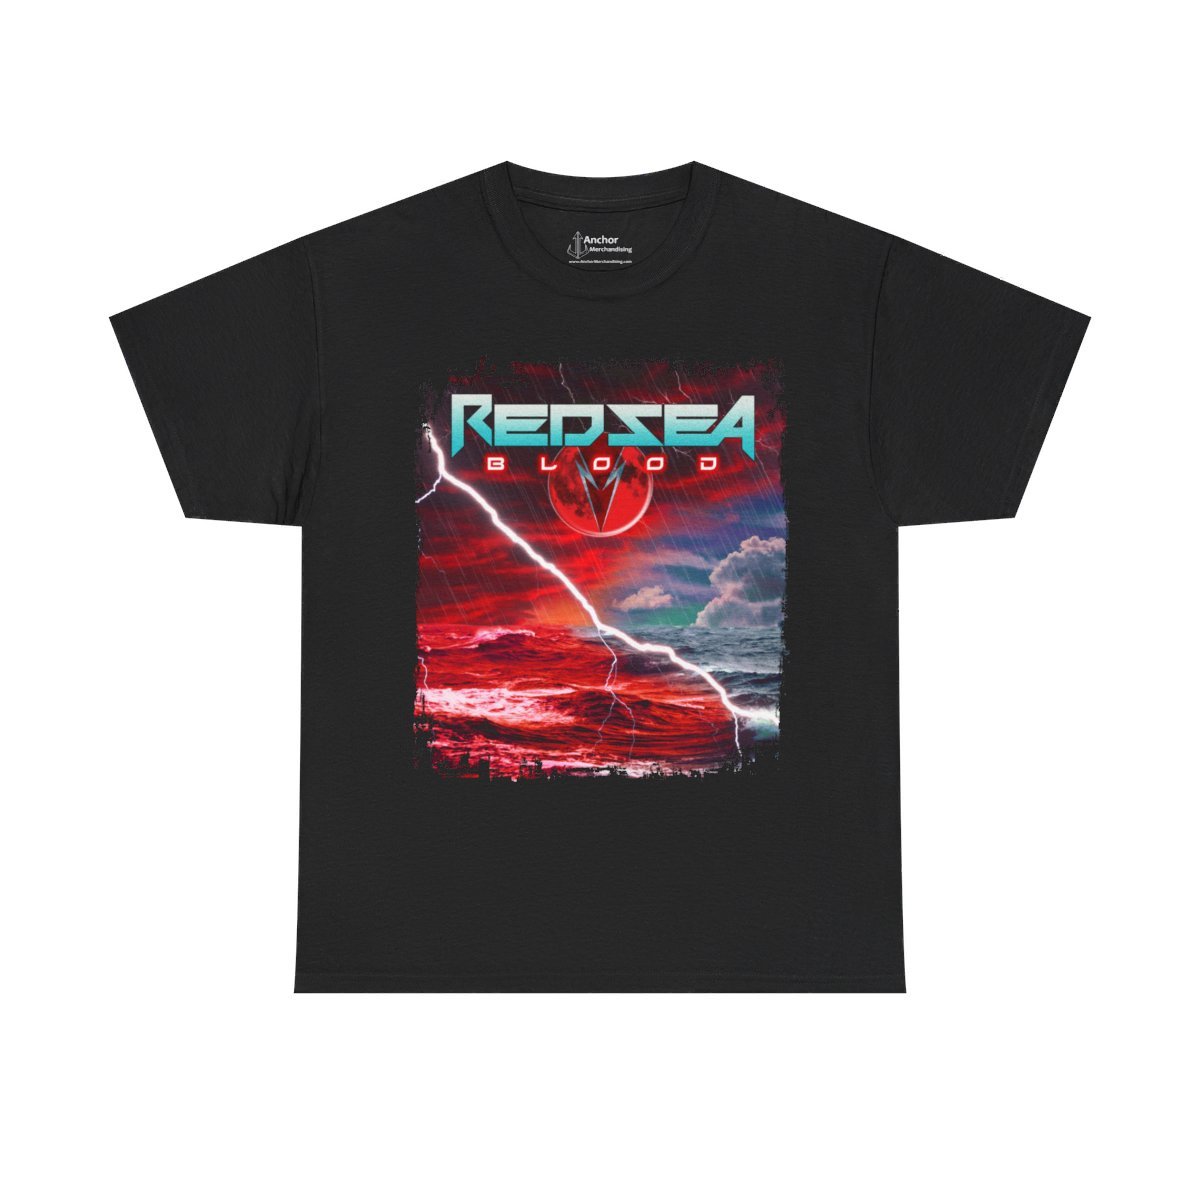 Red Sea – Blood Short Sleeve Tshirt